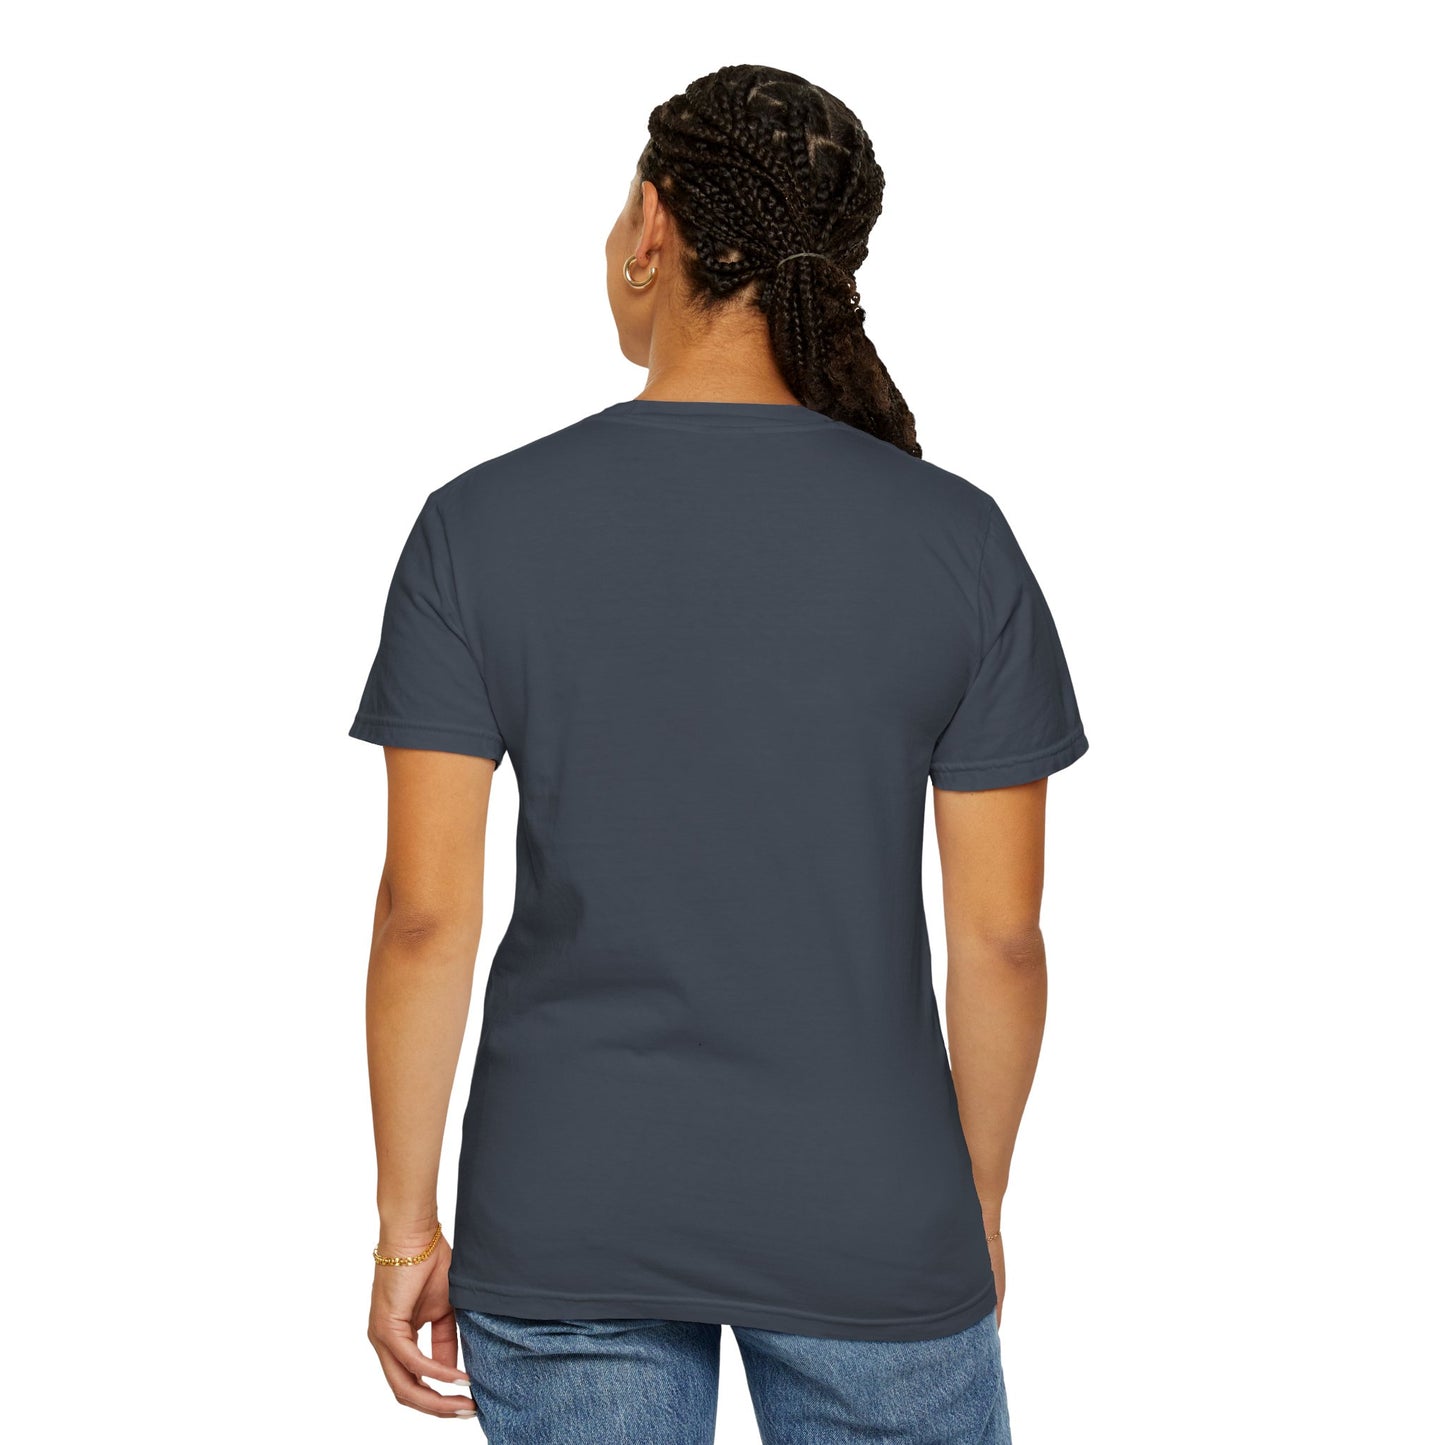 January Birth Flower "Snowdrop" - (For Print on Dark Fabric) - Unisex Garment-Dyed T-shirt